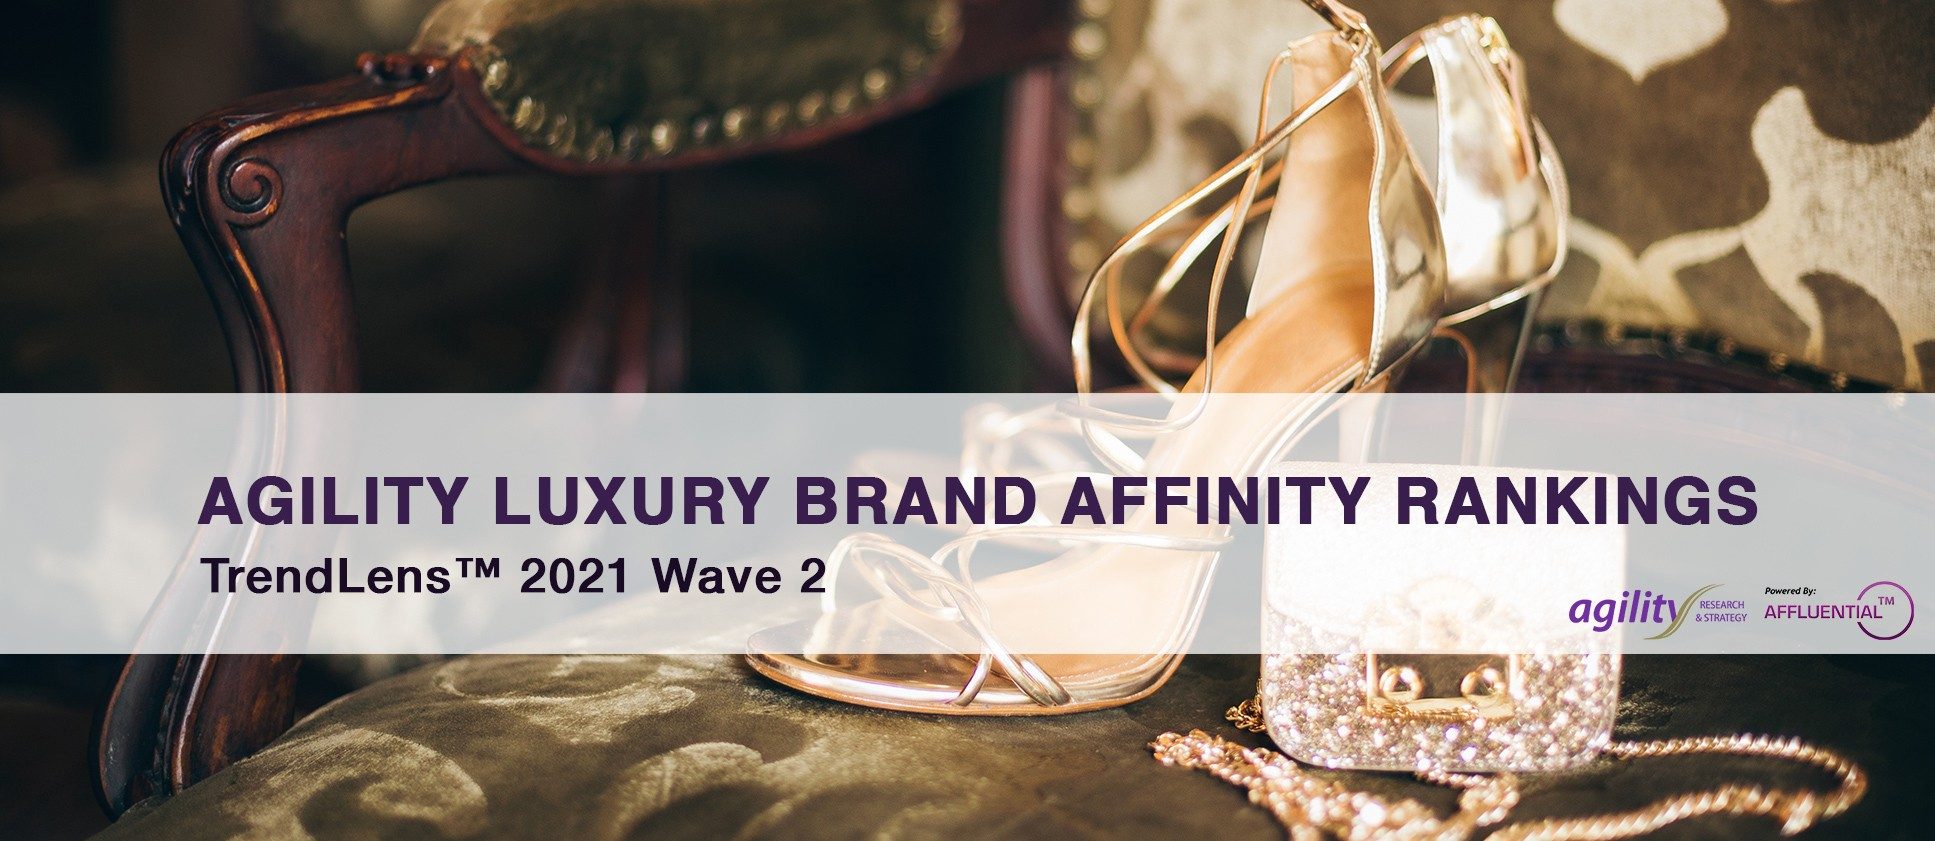 NEWSLETTER Agility China Luxury Brand Affinity Rankings 2021